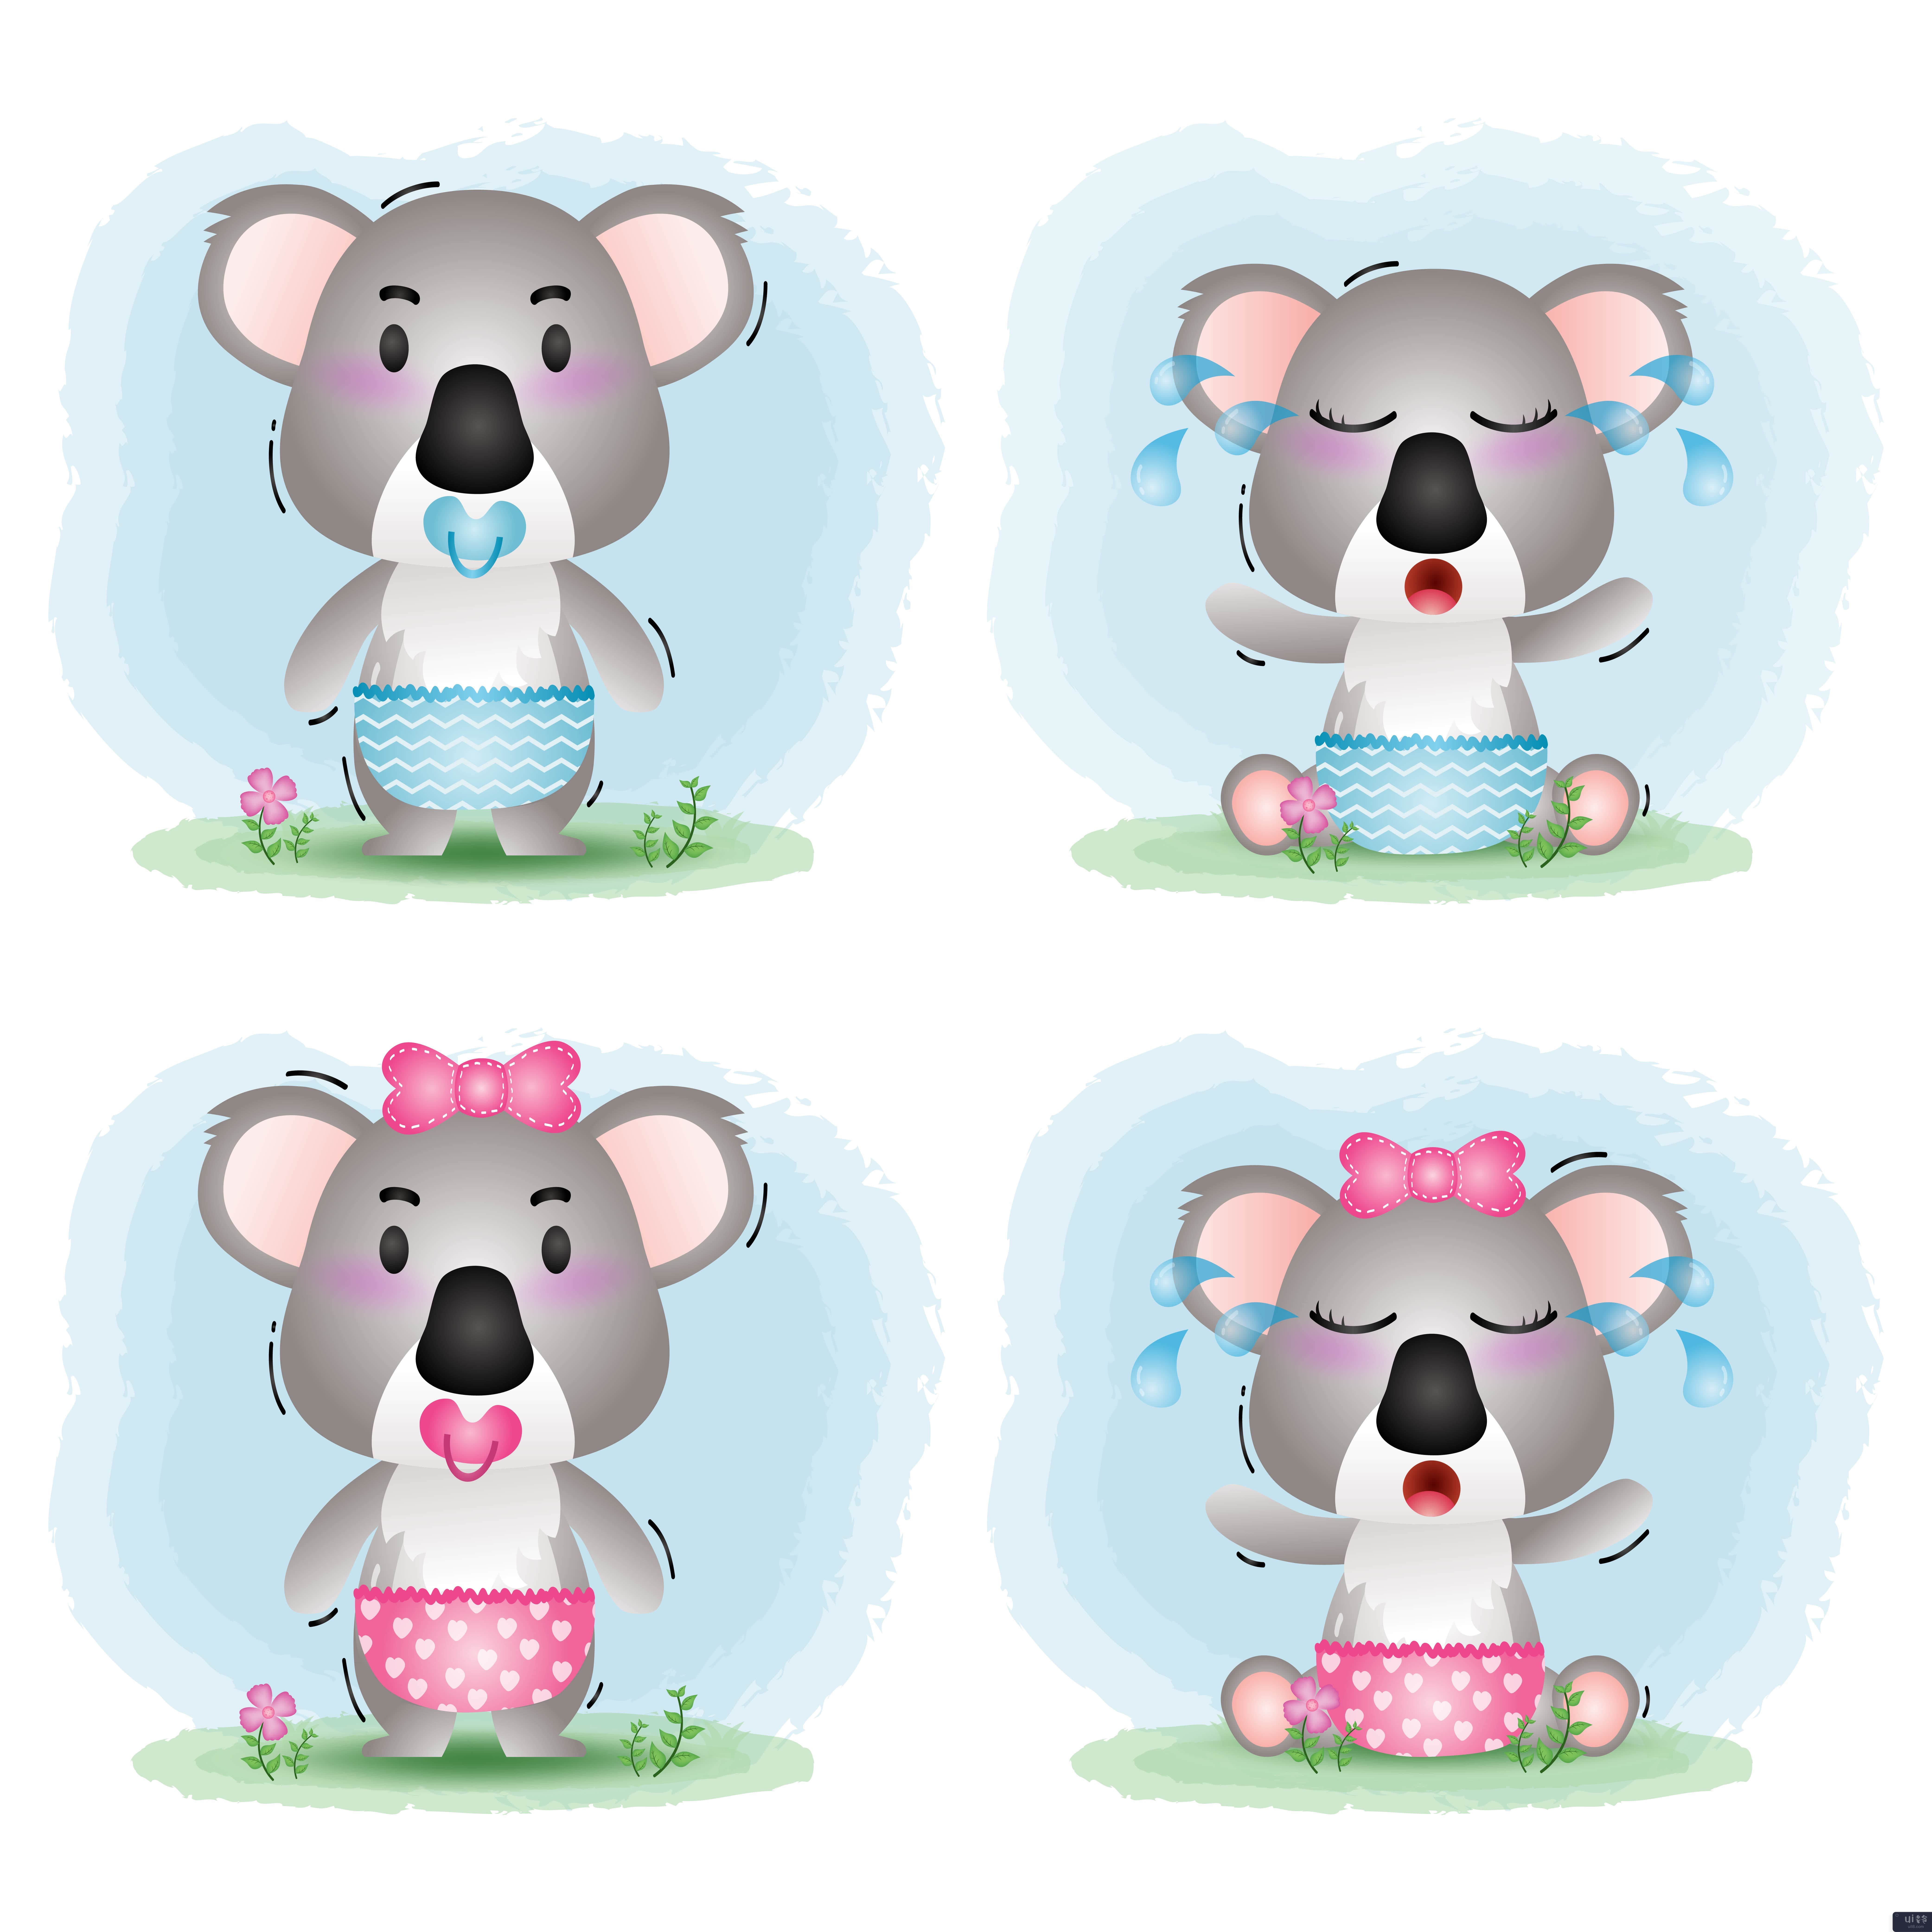 儿童风格的可爱小考拉系列(cute baby koala collection in the children's style)插图2